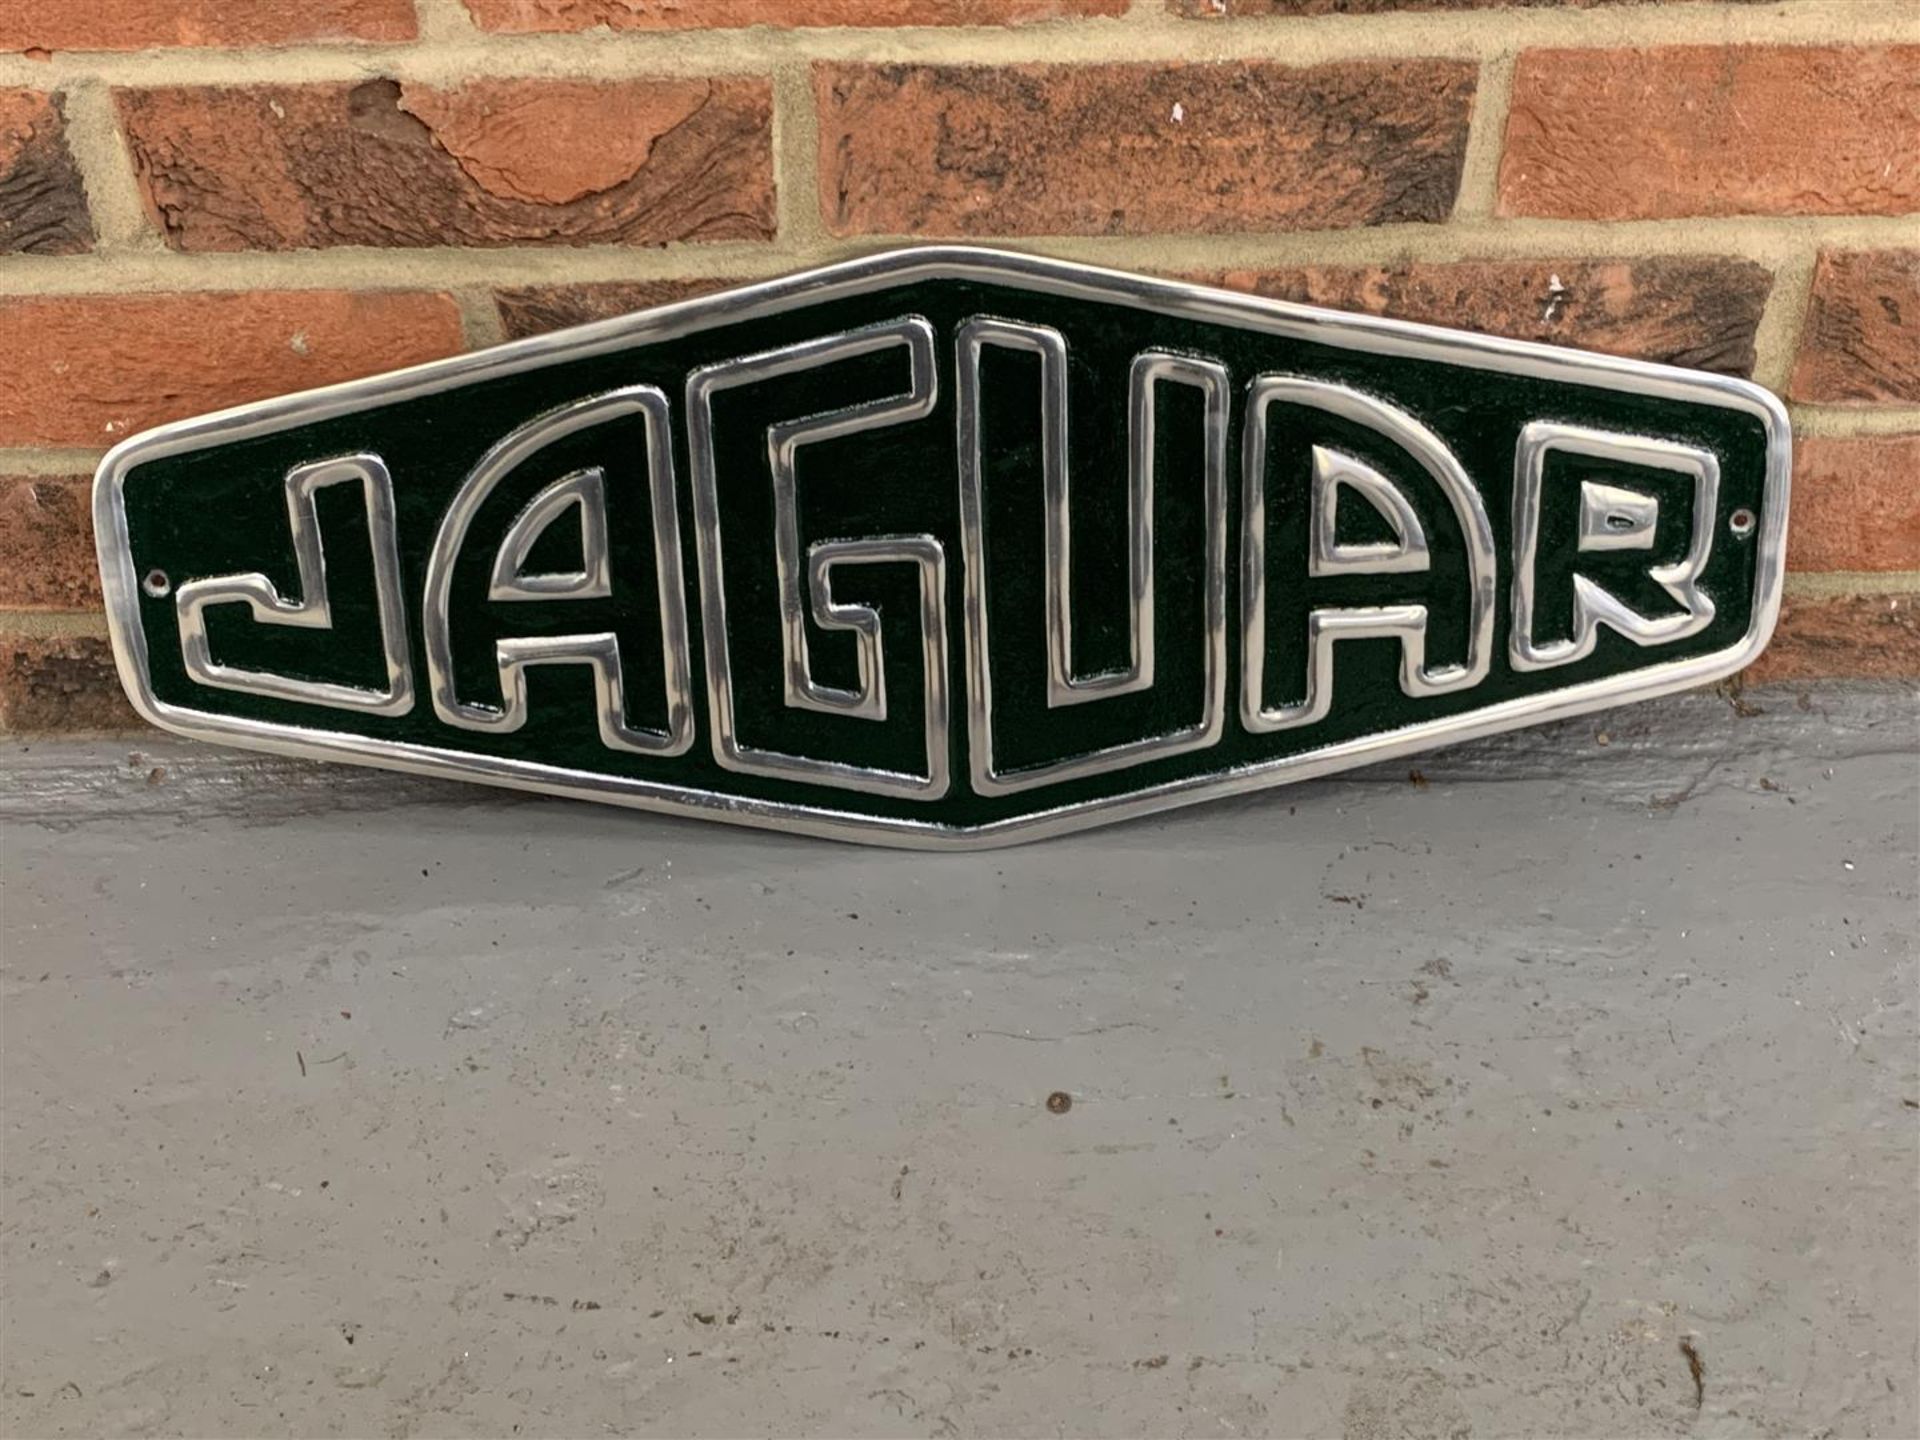 Cast Aluminium Jaguar Sign